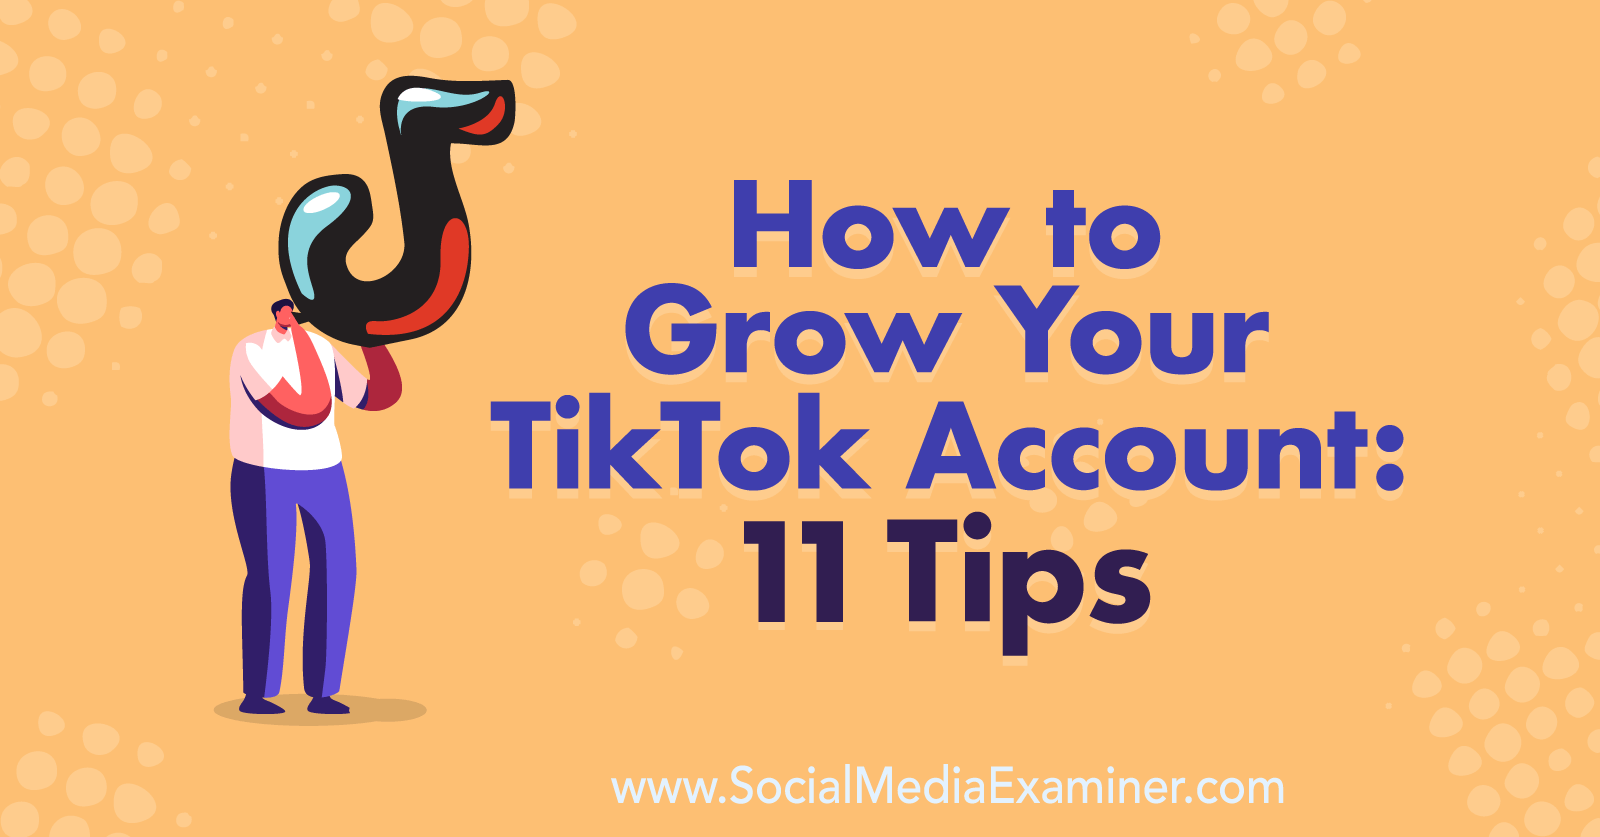 How to Grow Your TikTok Account 11 Tips Social Media Examiner